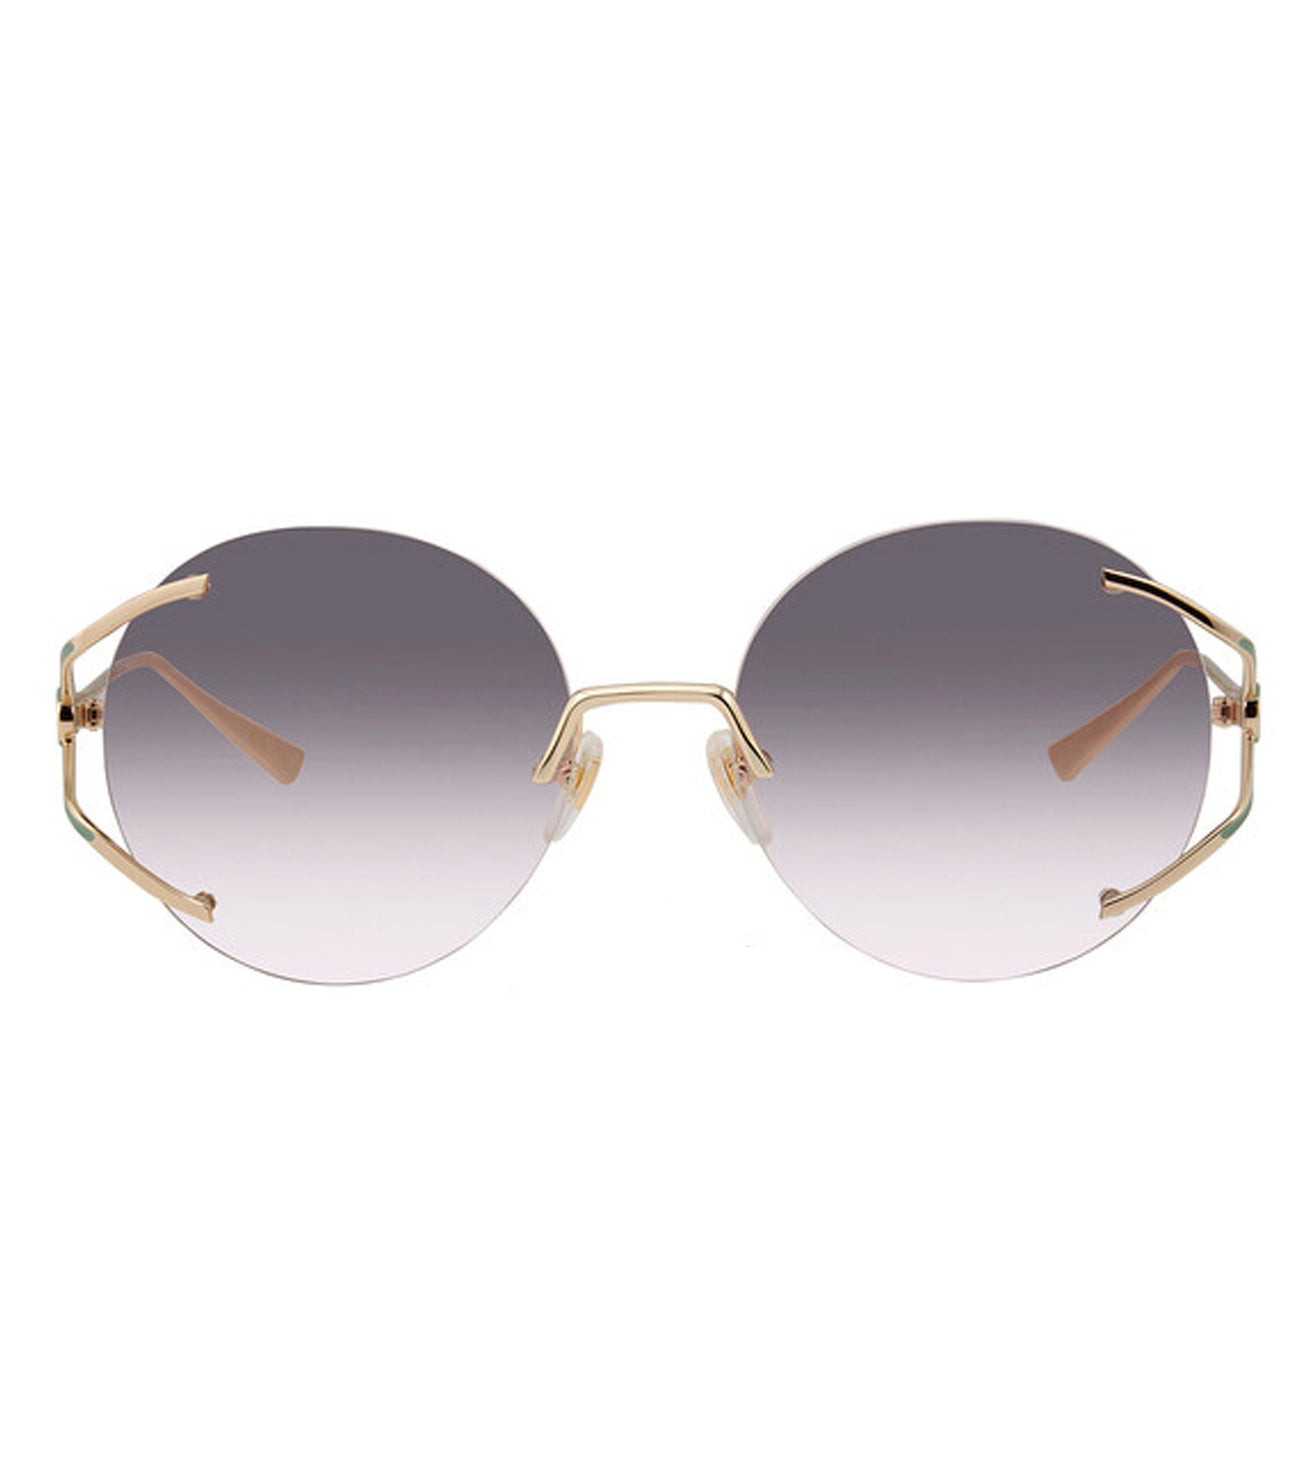 Gucci Women's Violet Round Sunglasses